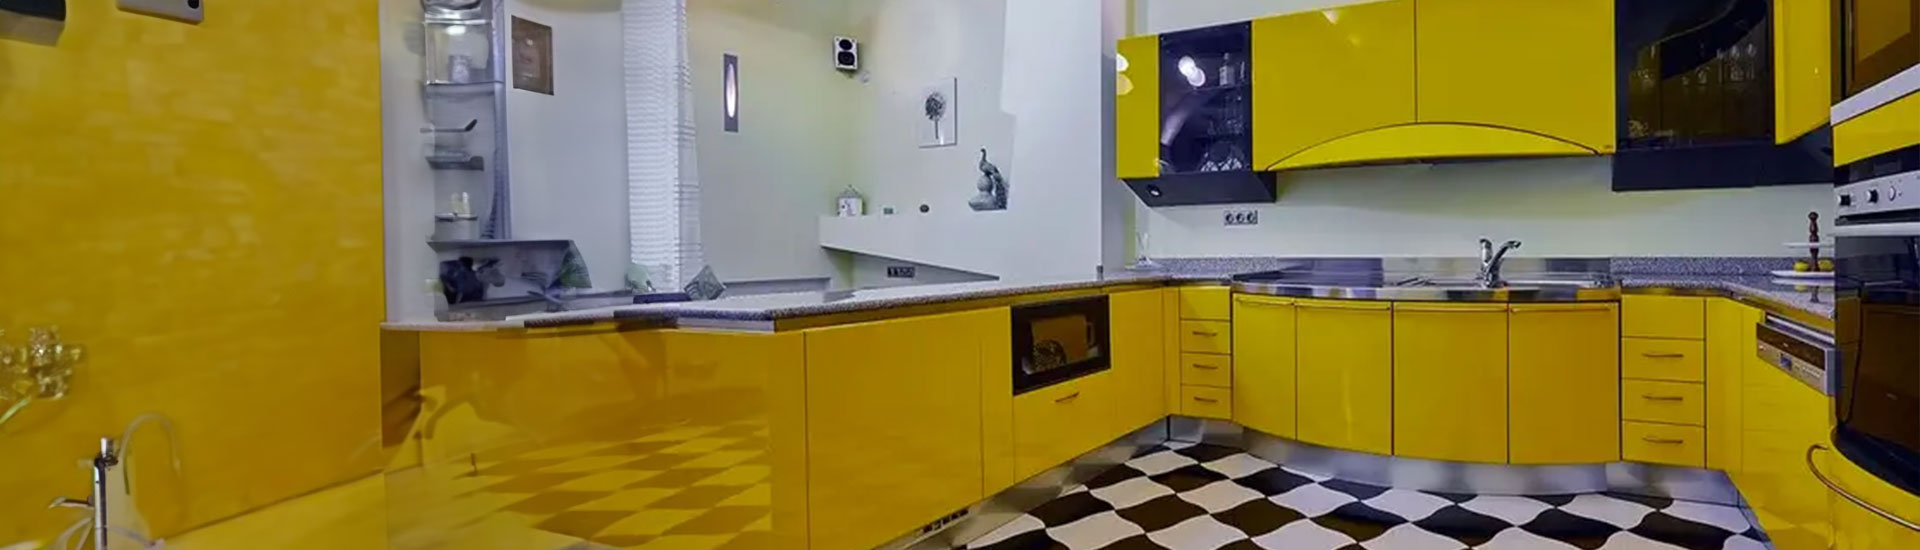 Yellow Kitchen Cabinet Wraps